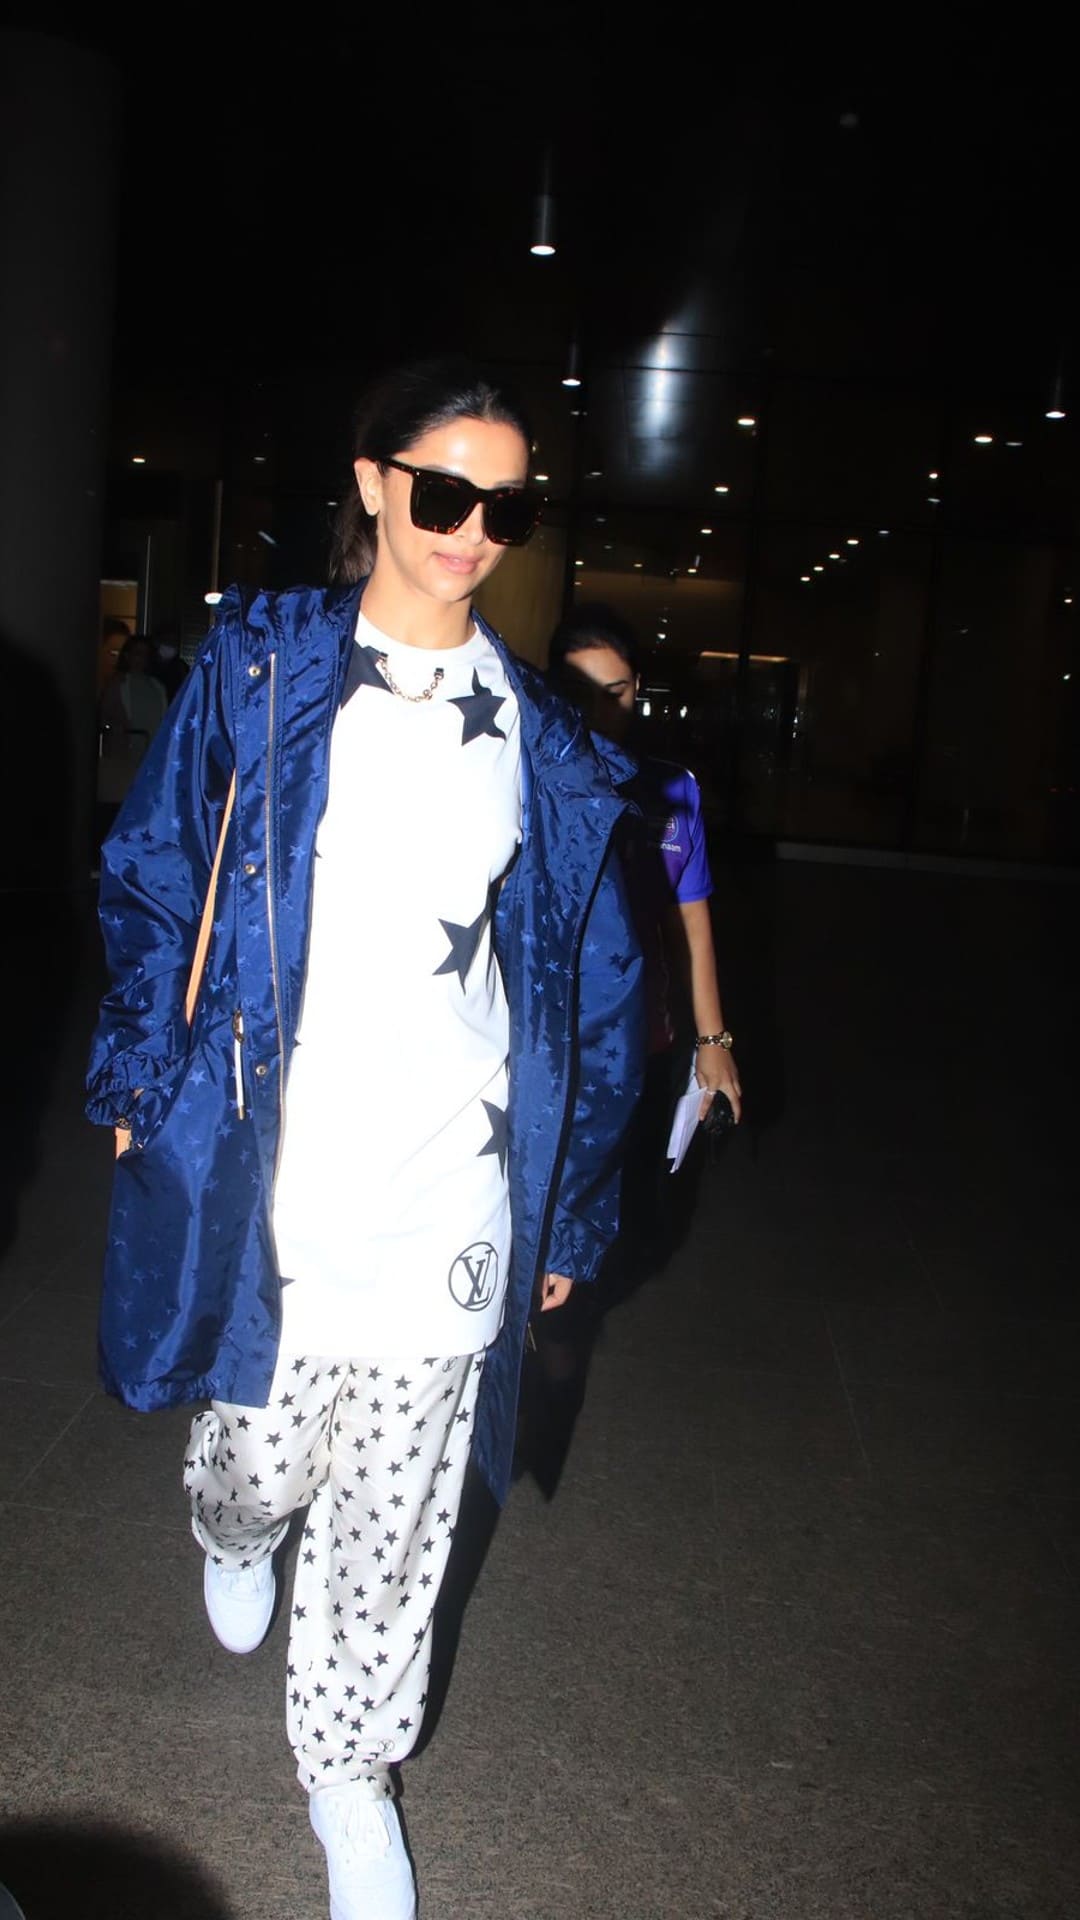 Deepika Padukone In Louis Vuitton Outfit Makes Heads Turn At Paris